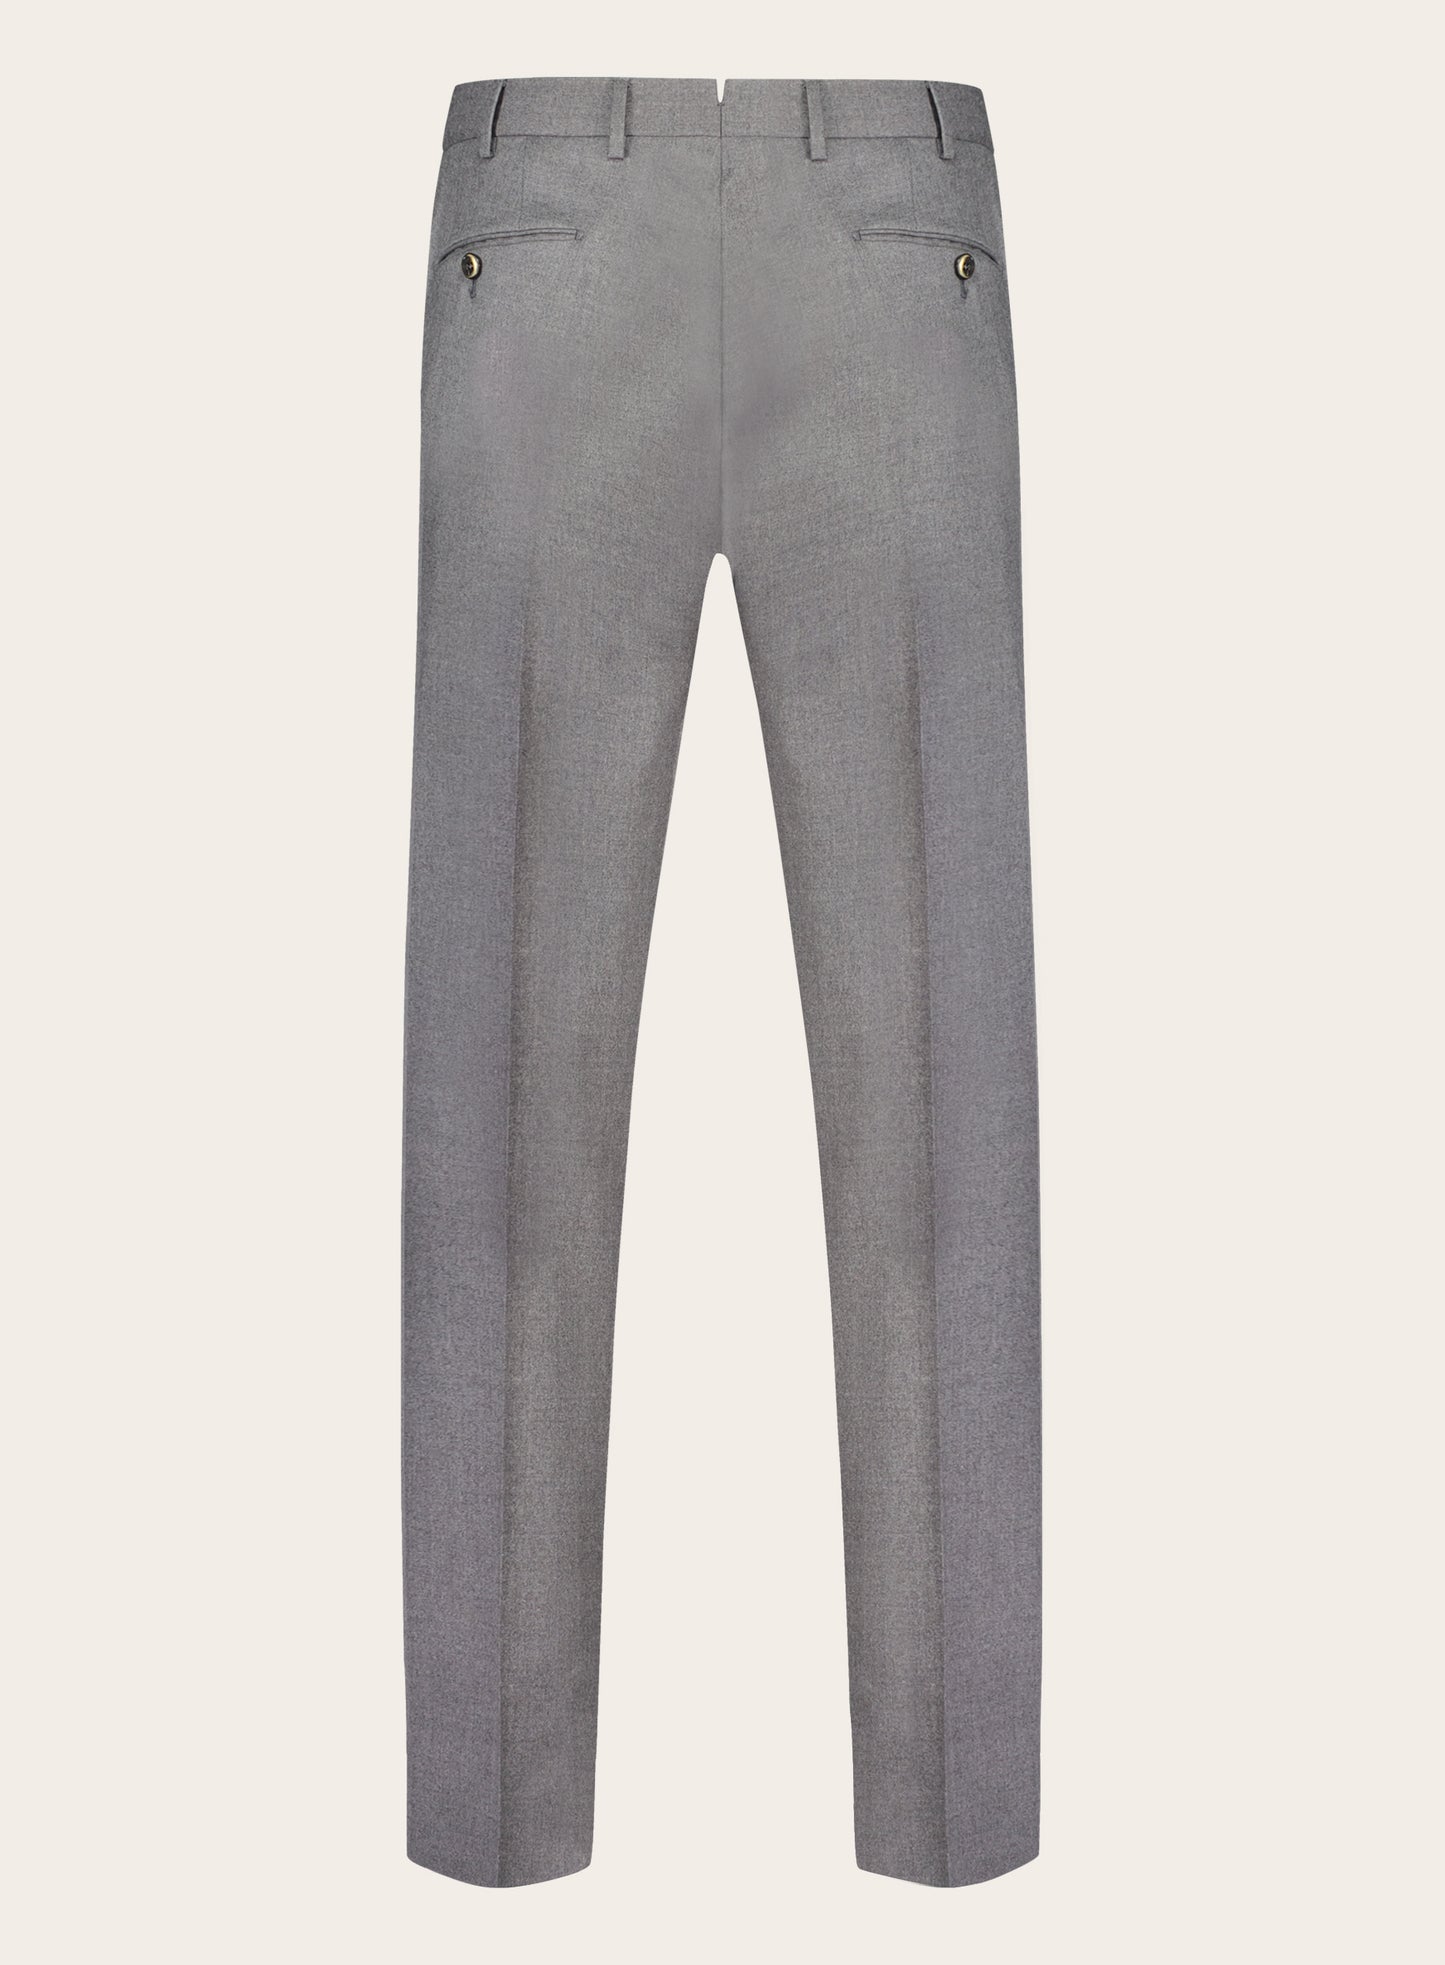 Slim-fit stretch pantalon van wol | M.Grijs